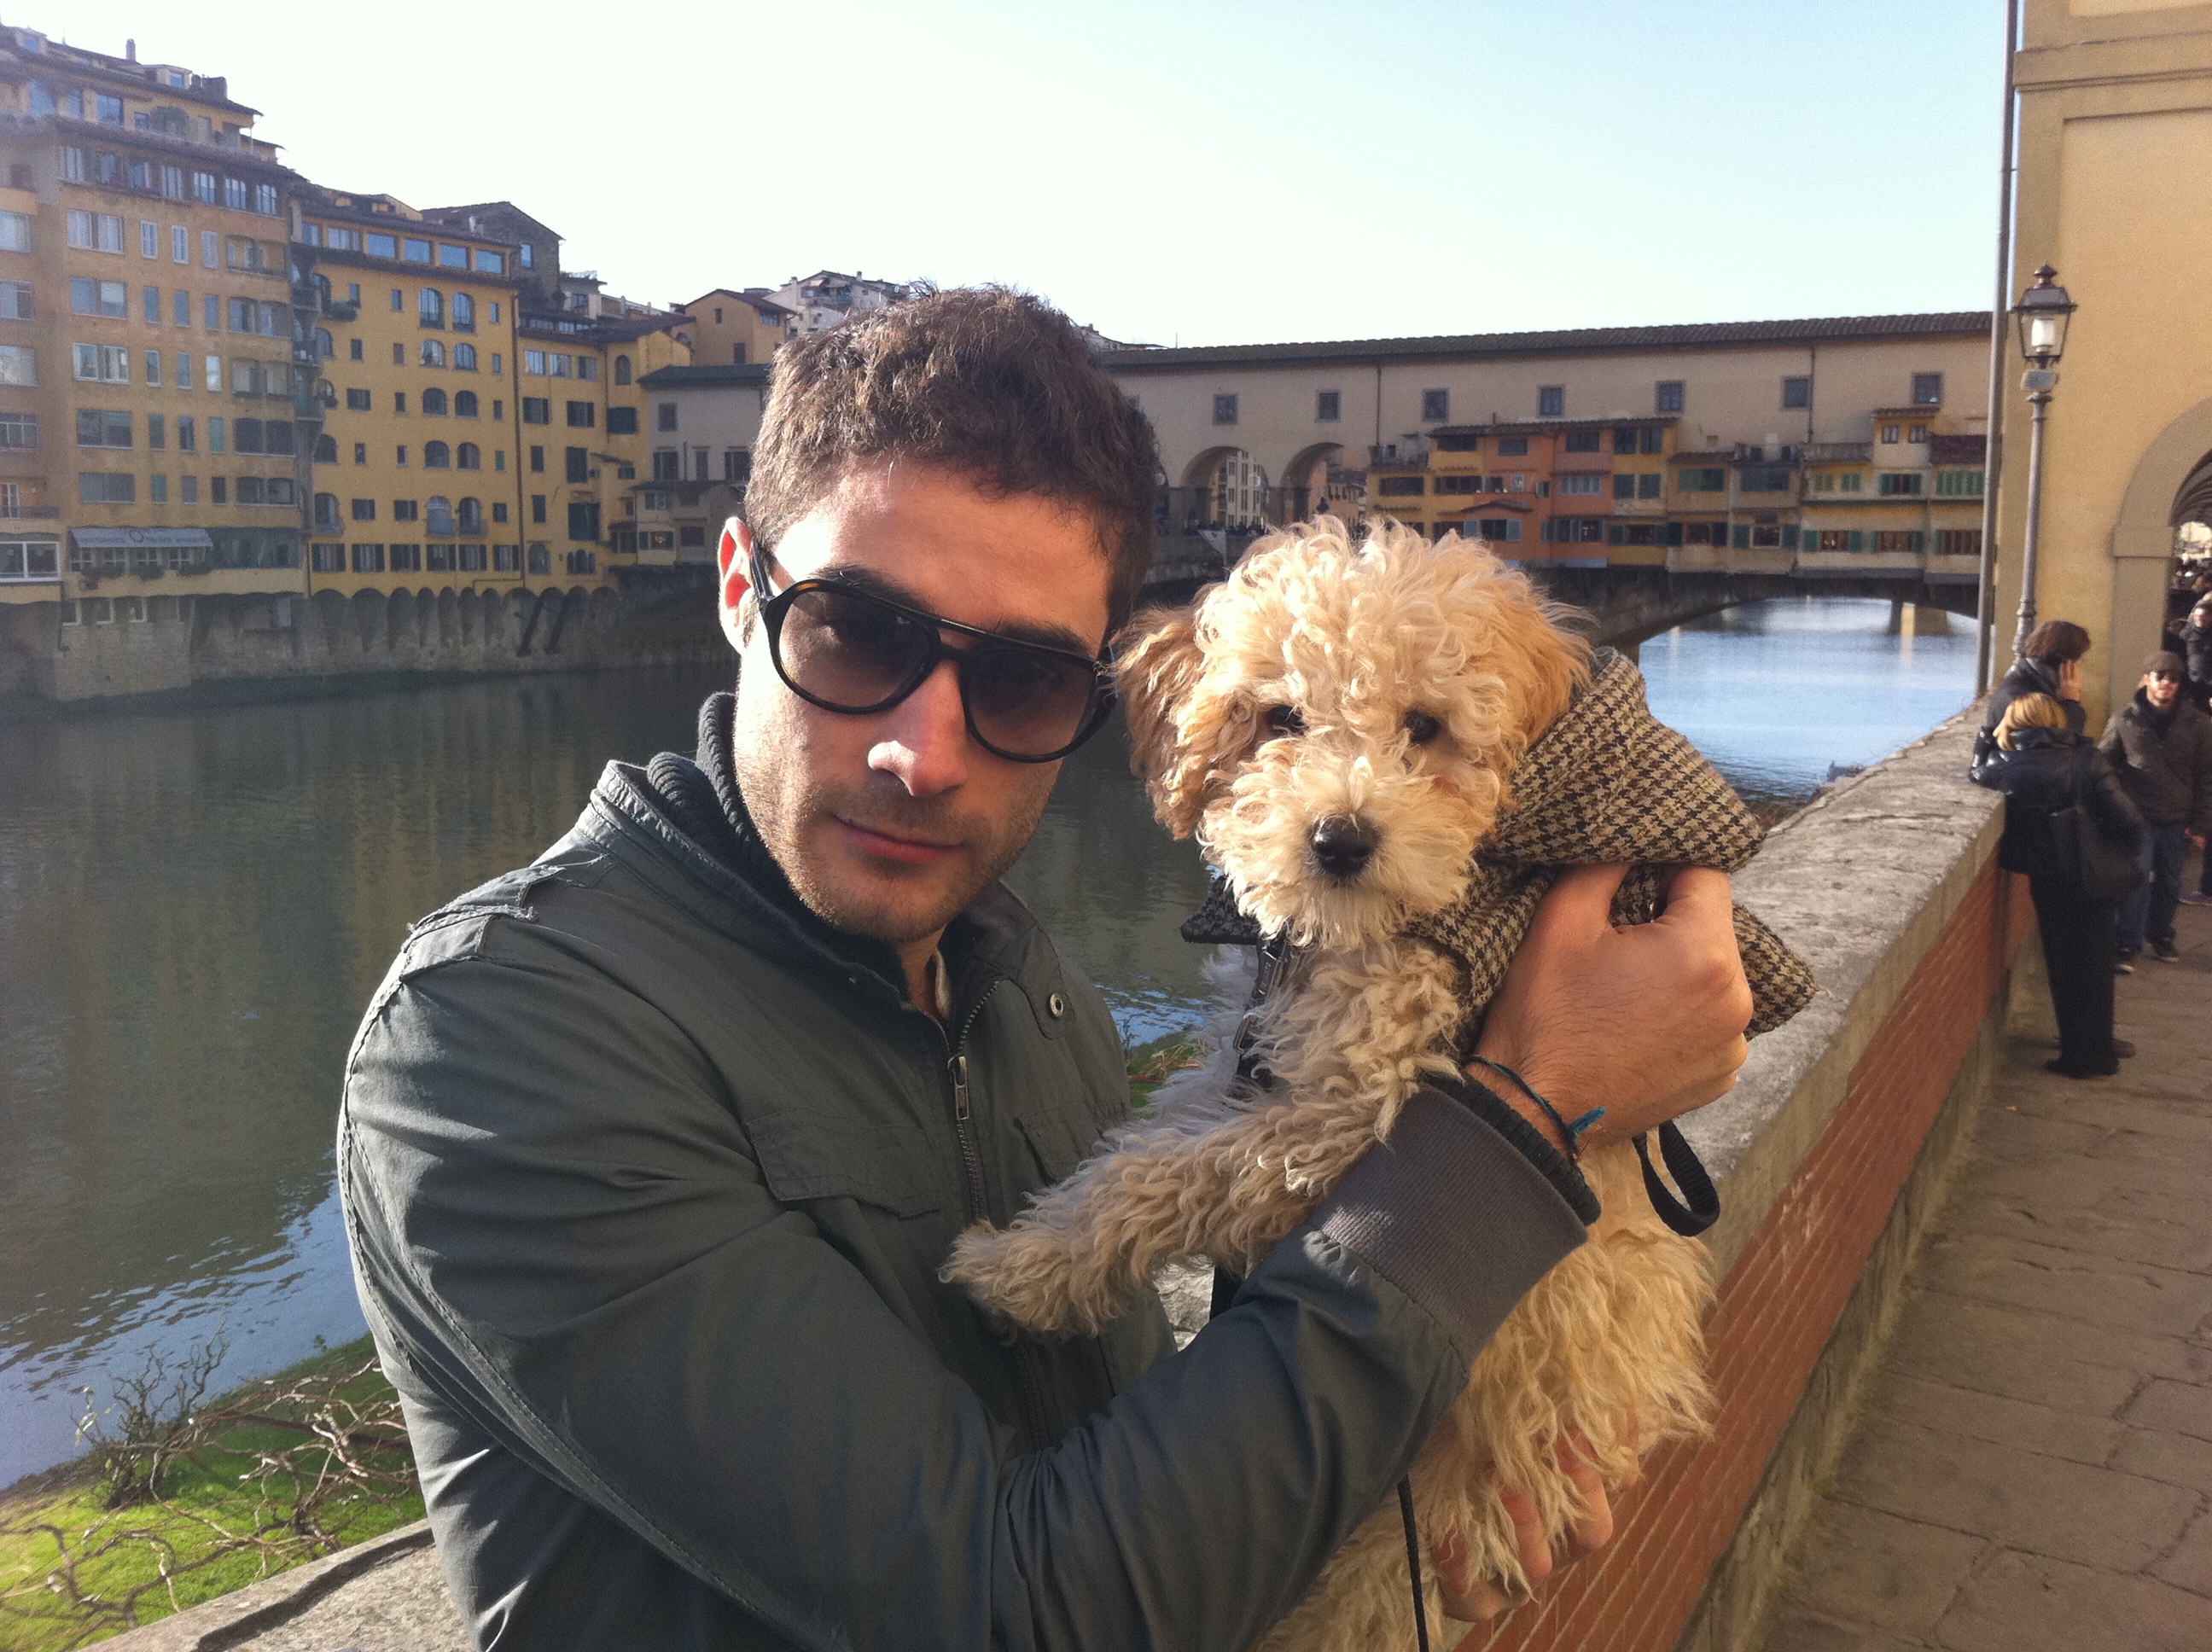 Demon puppy, Francesco and the famous Ponte Vecchio bridge in the background. 